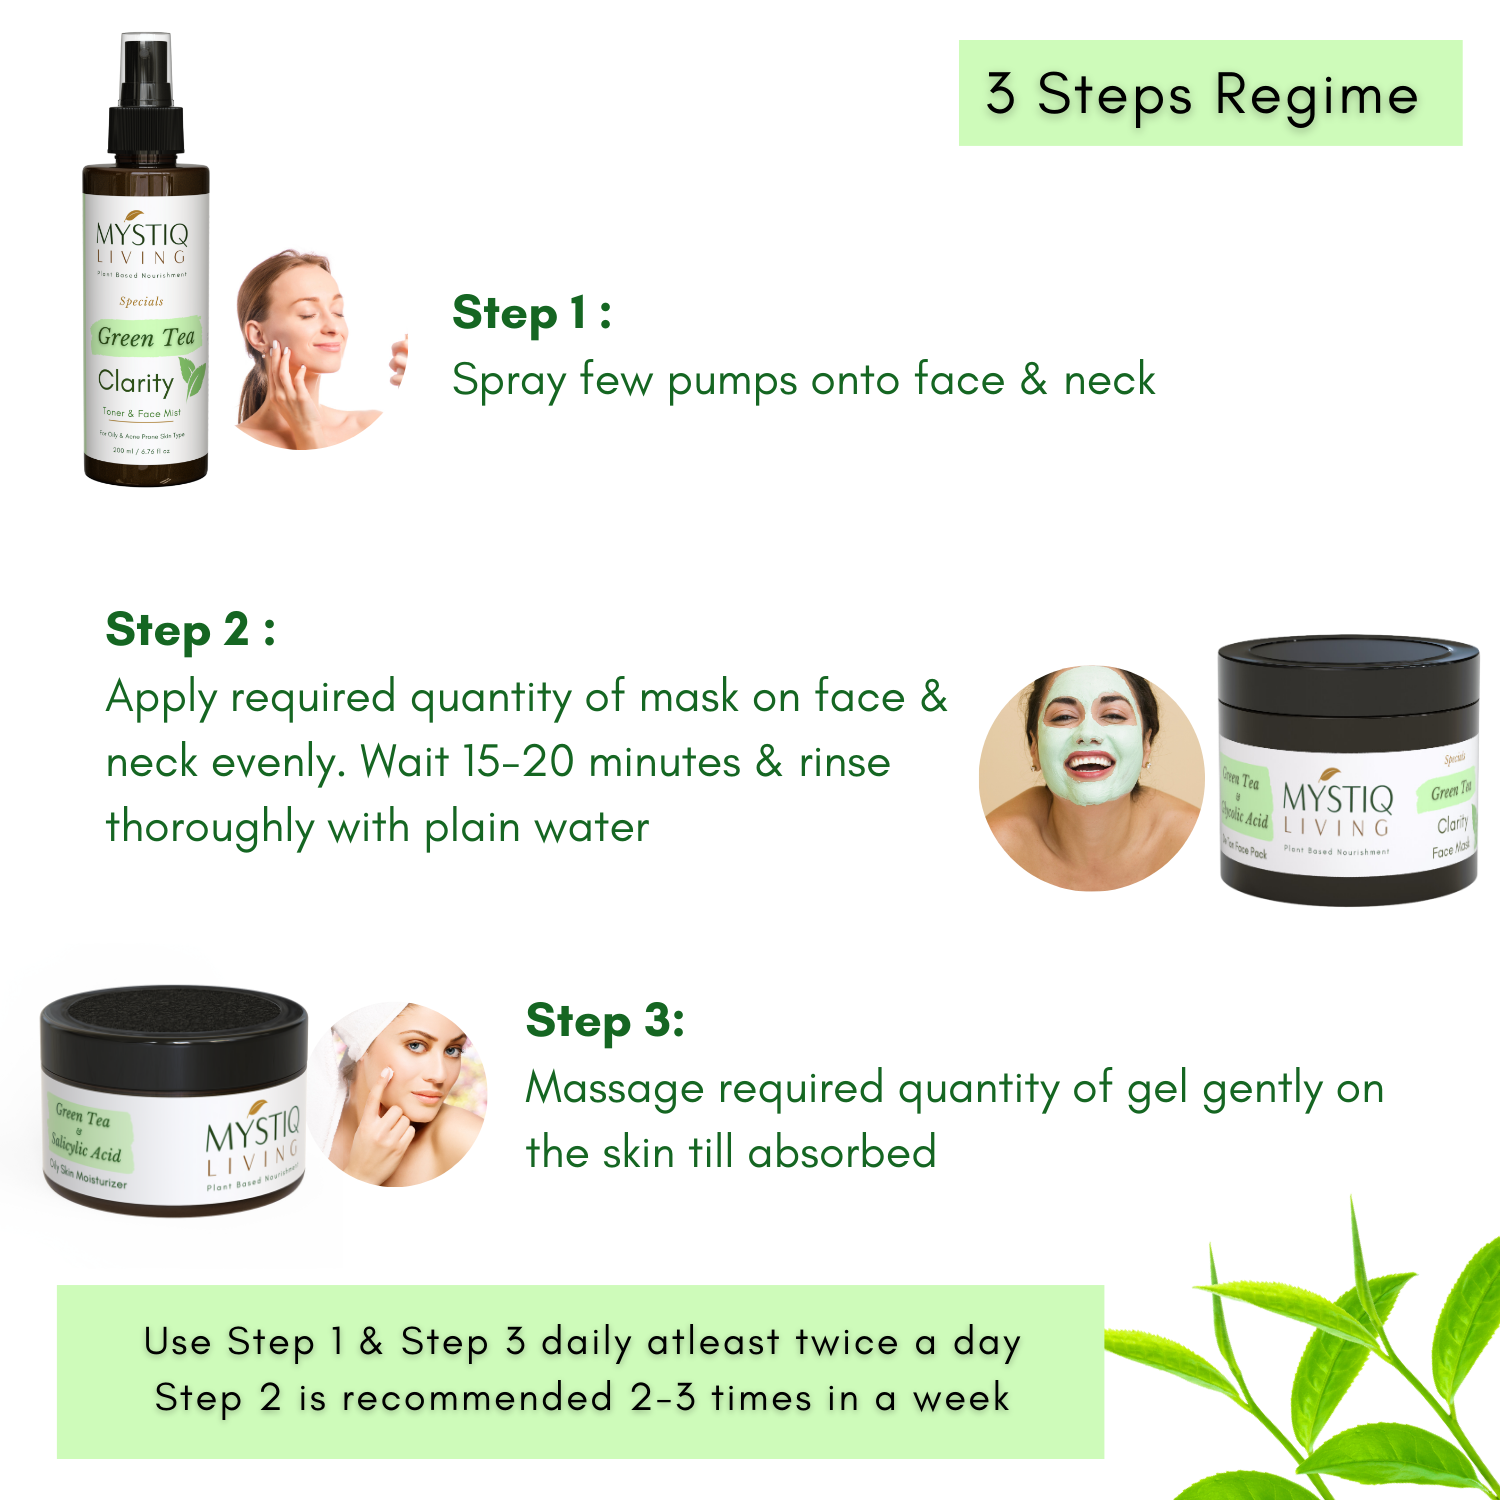 Green Tea Clarity Anti Acne Kit for Oily & Acne Prone Skin